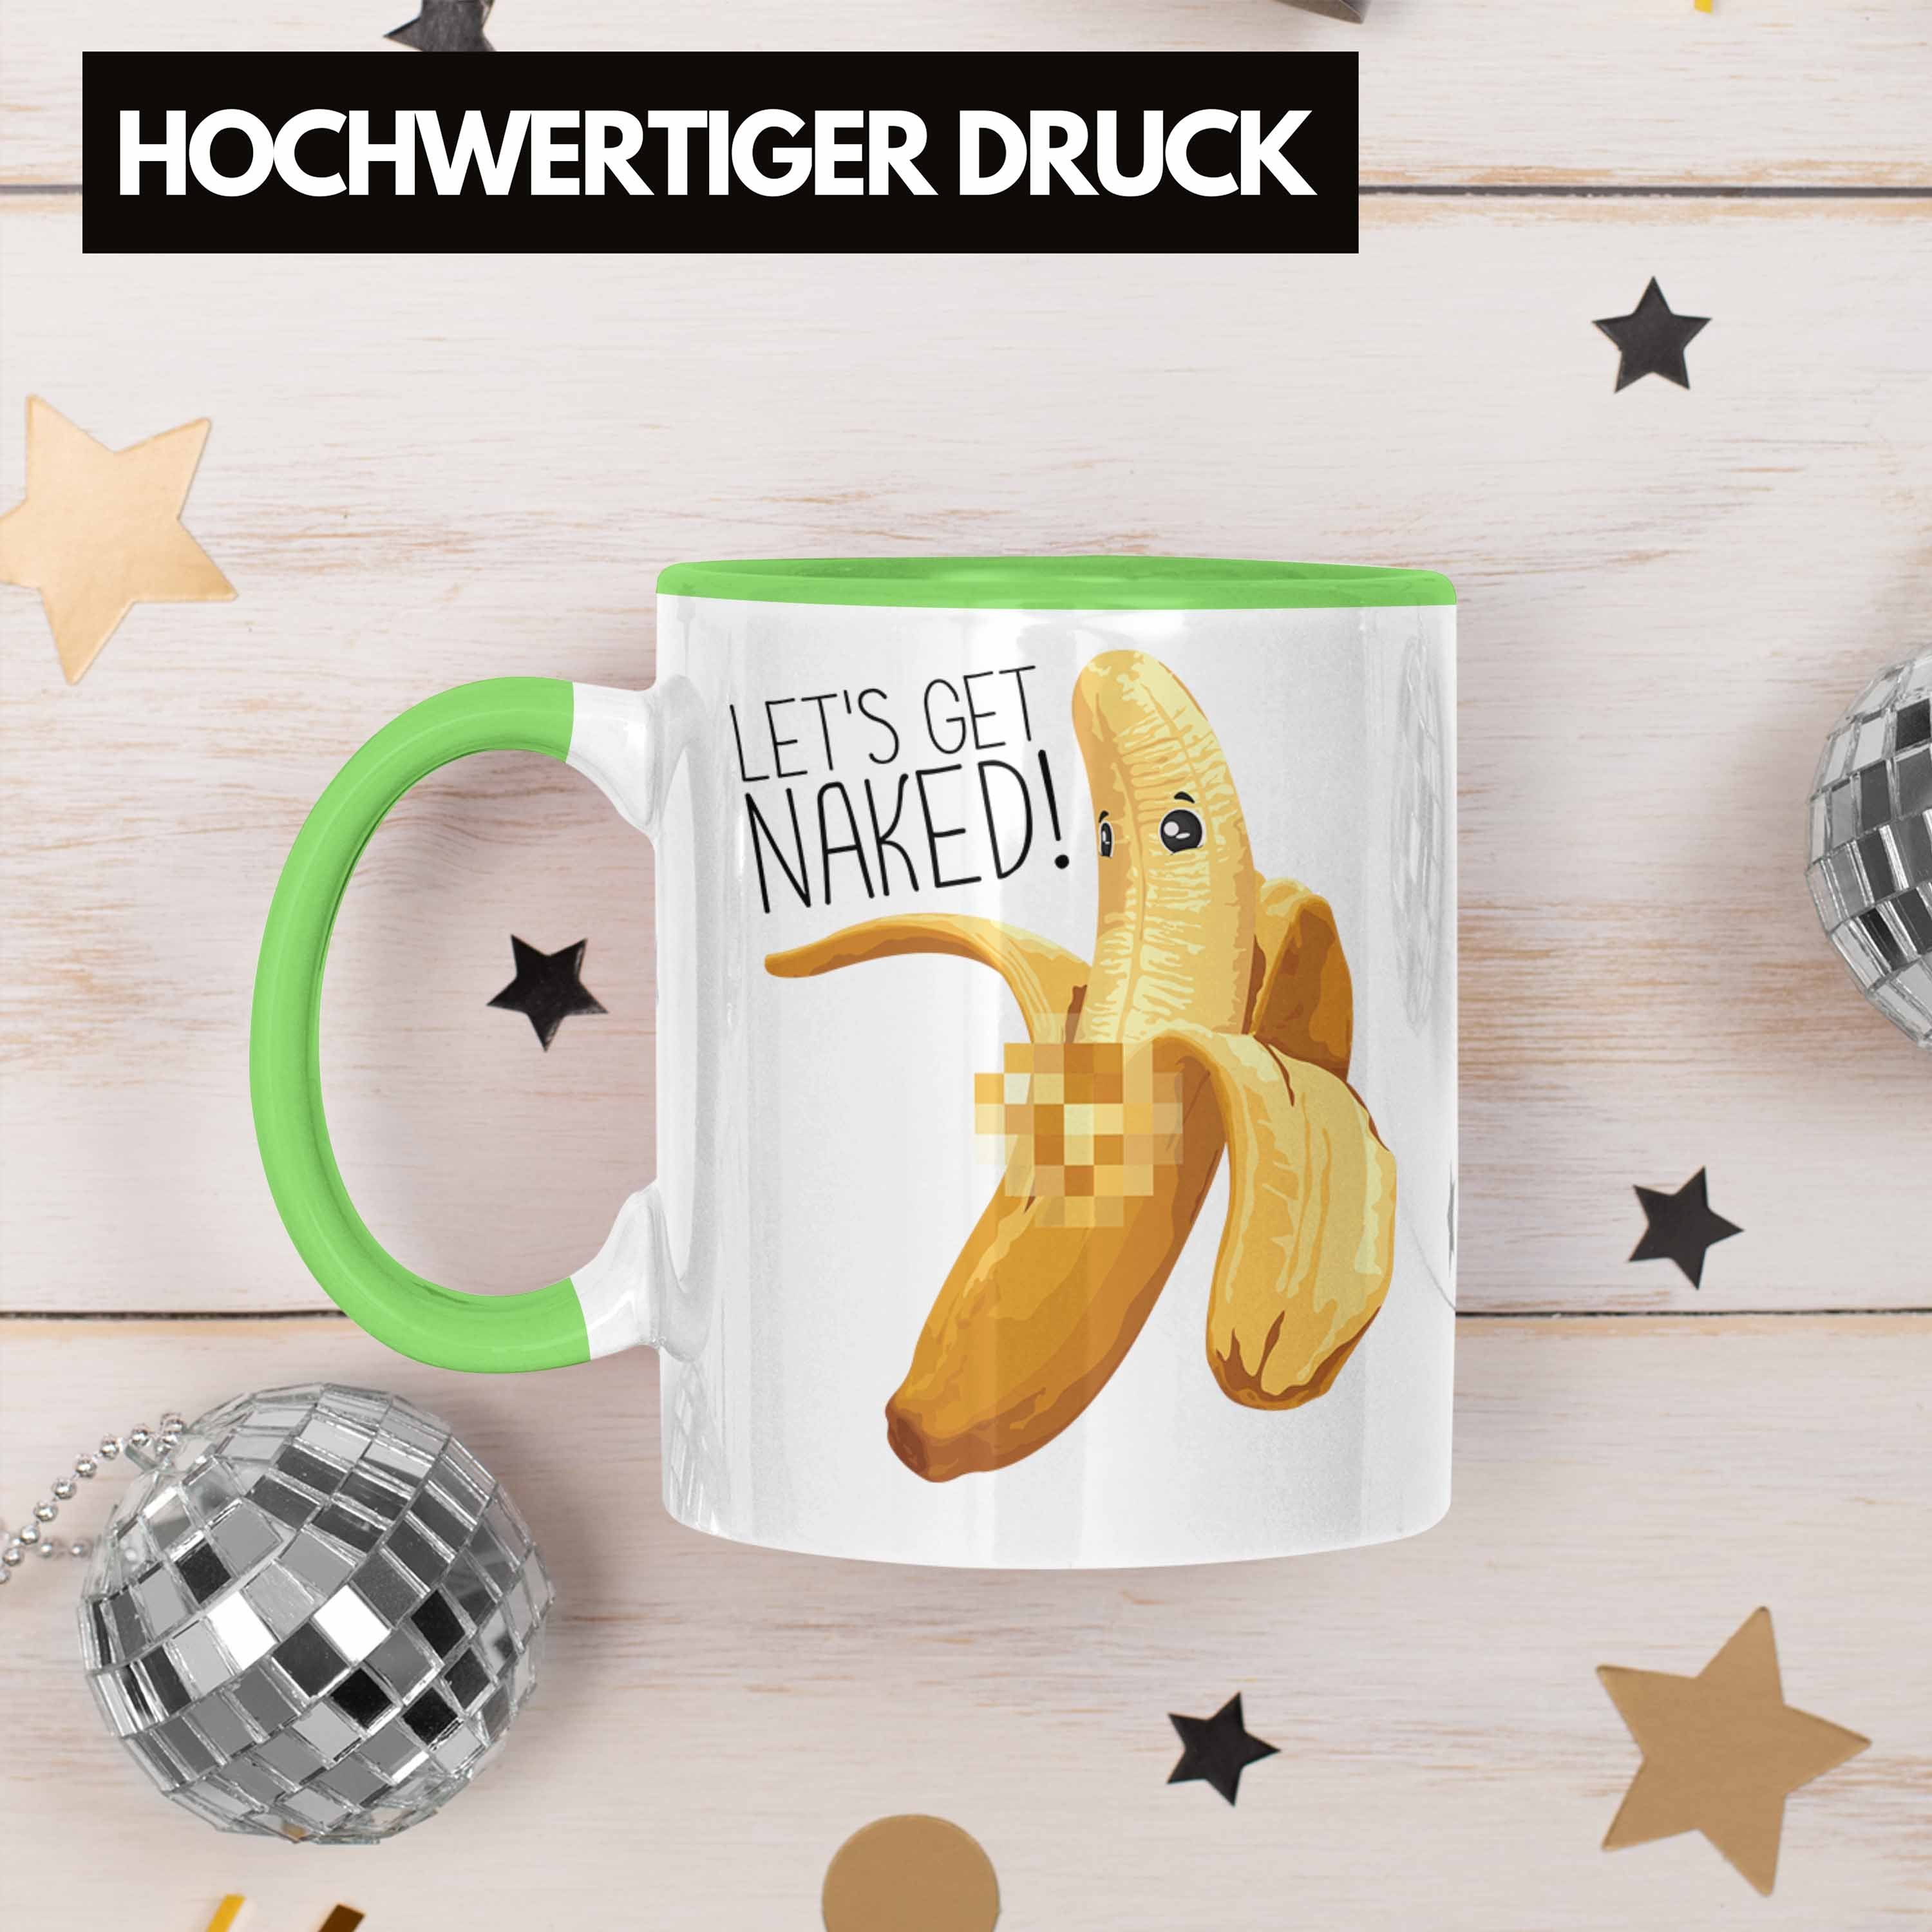 Get Naked Tasse Striptease Geschenk Erwachsener Banane Bech Humor Lets Grün Trendation Tasse